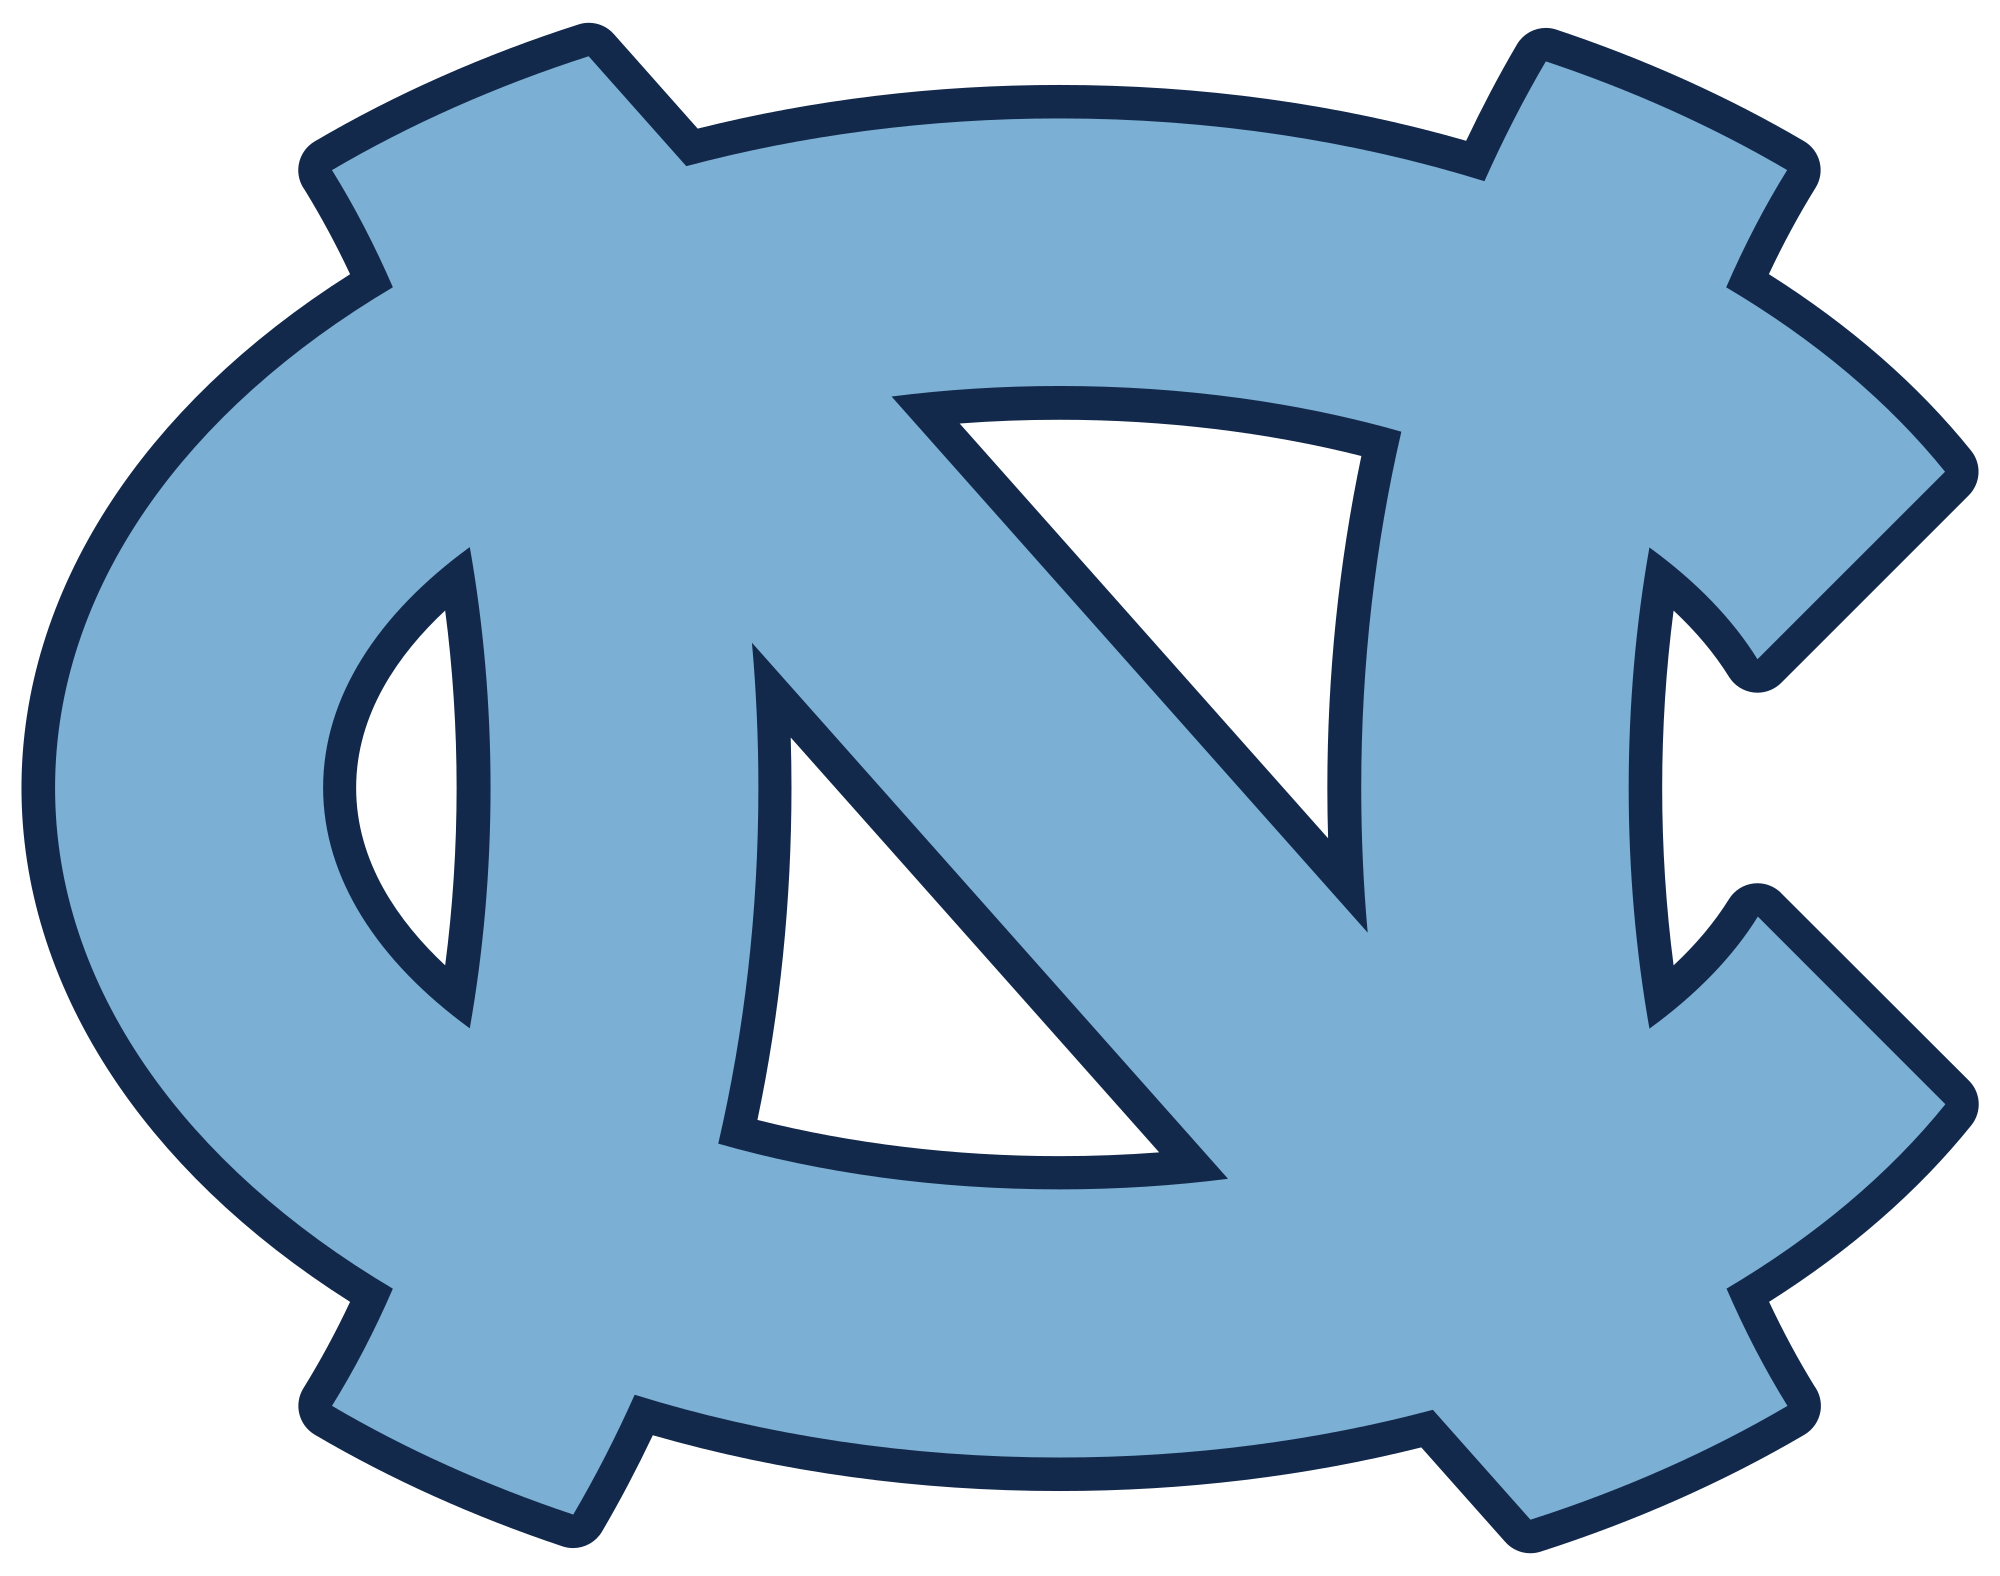 NC Logo - File:North Carolina Tar Heels logo.svg - Wikimedia Commons